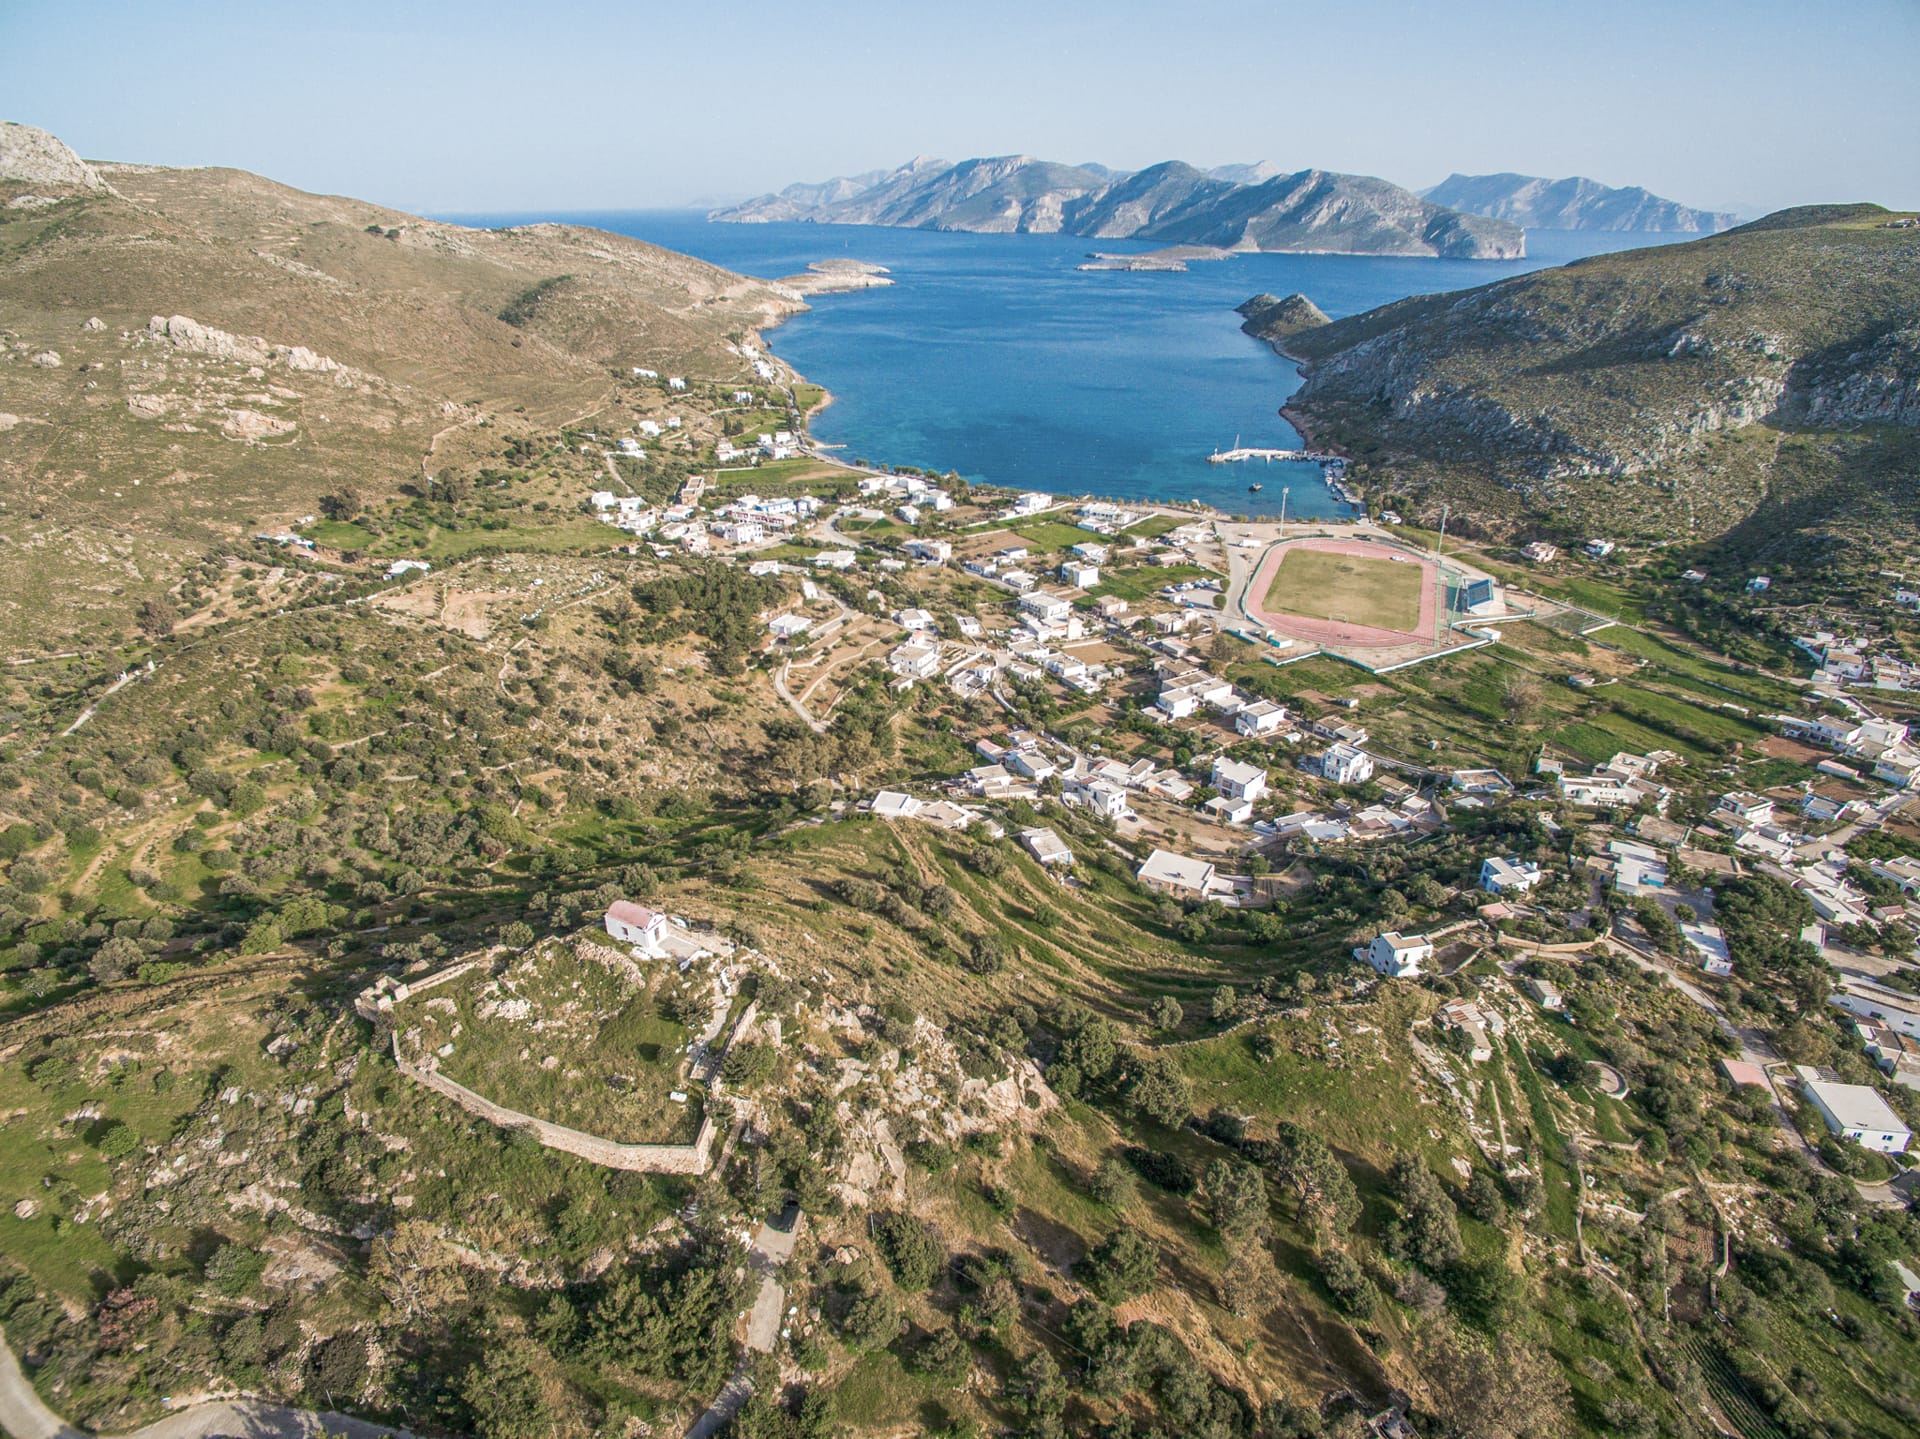 Xirokampos village by the Association of Leros' Food & Beverage Professionals